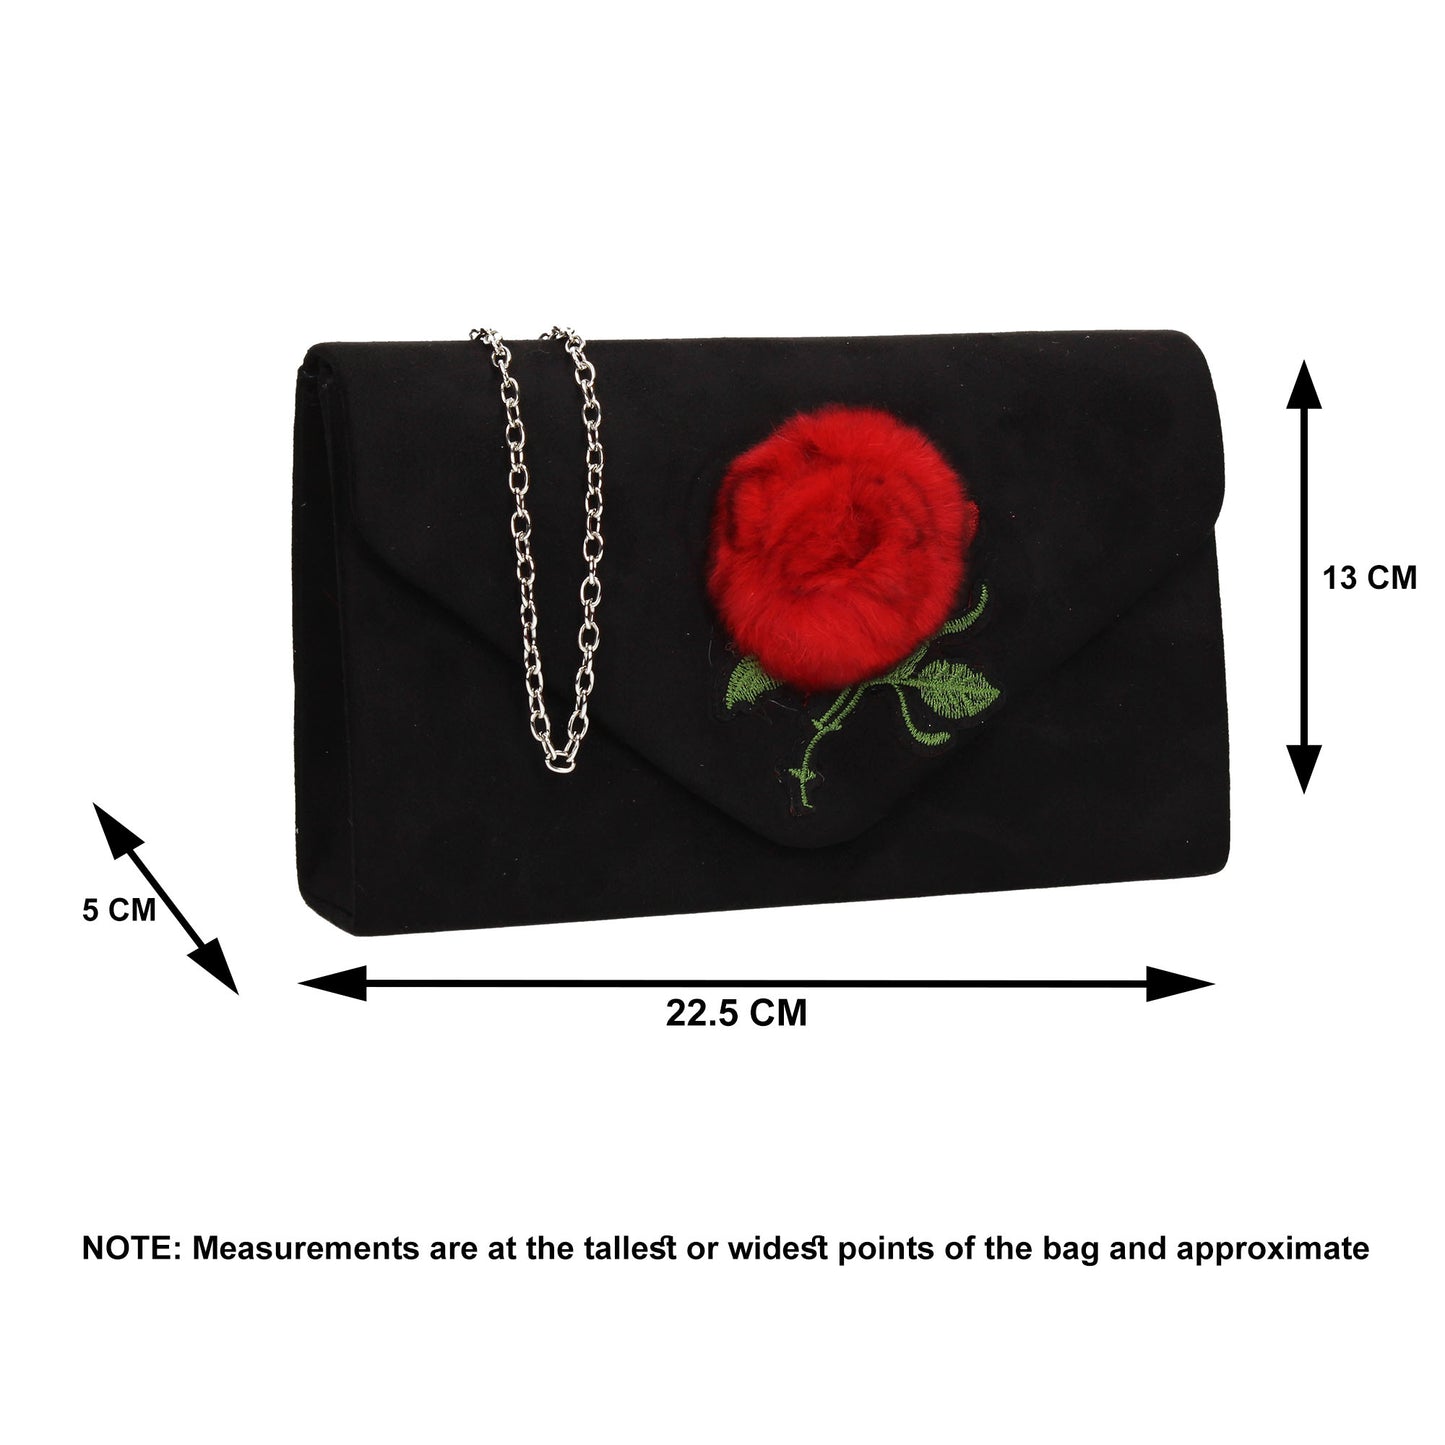 SWANKYSWANS Roxanne Fur Rose Clutch Bag Red Cute Cheap Clutch Bag For Weddings School and Work